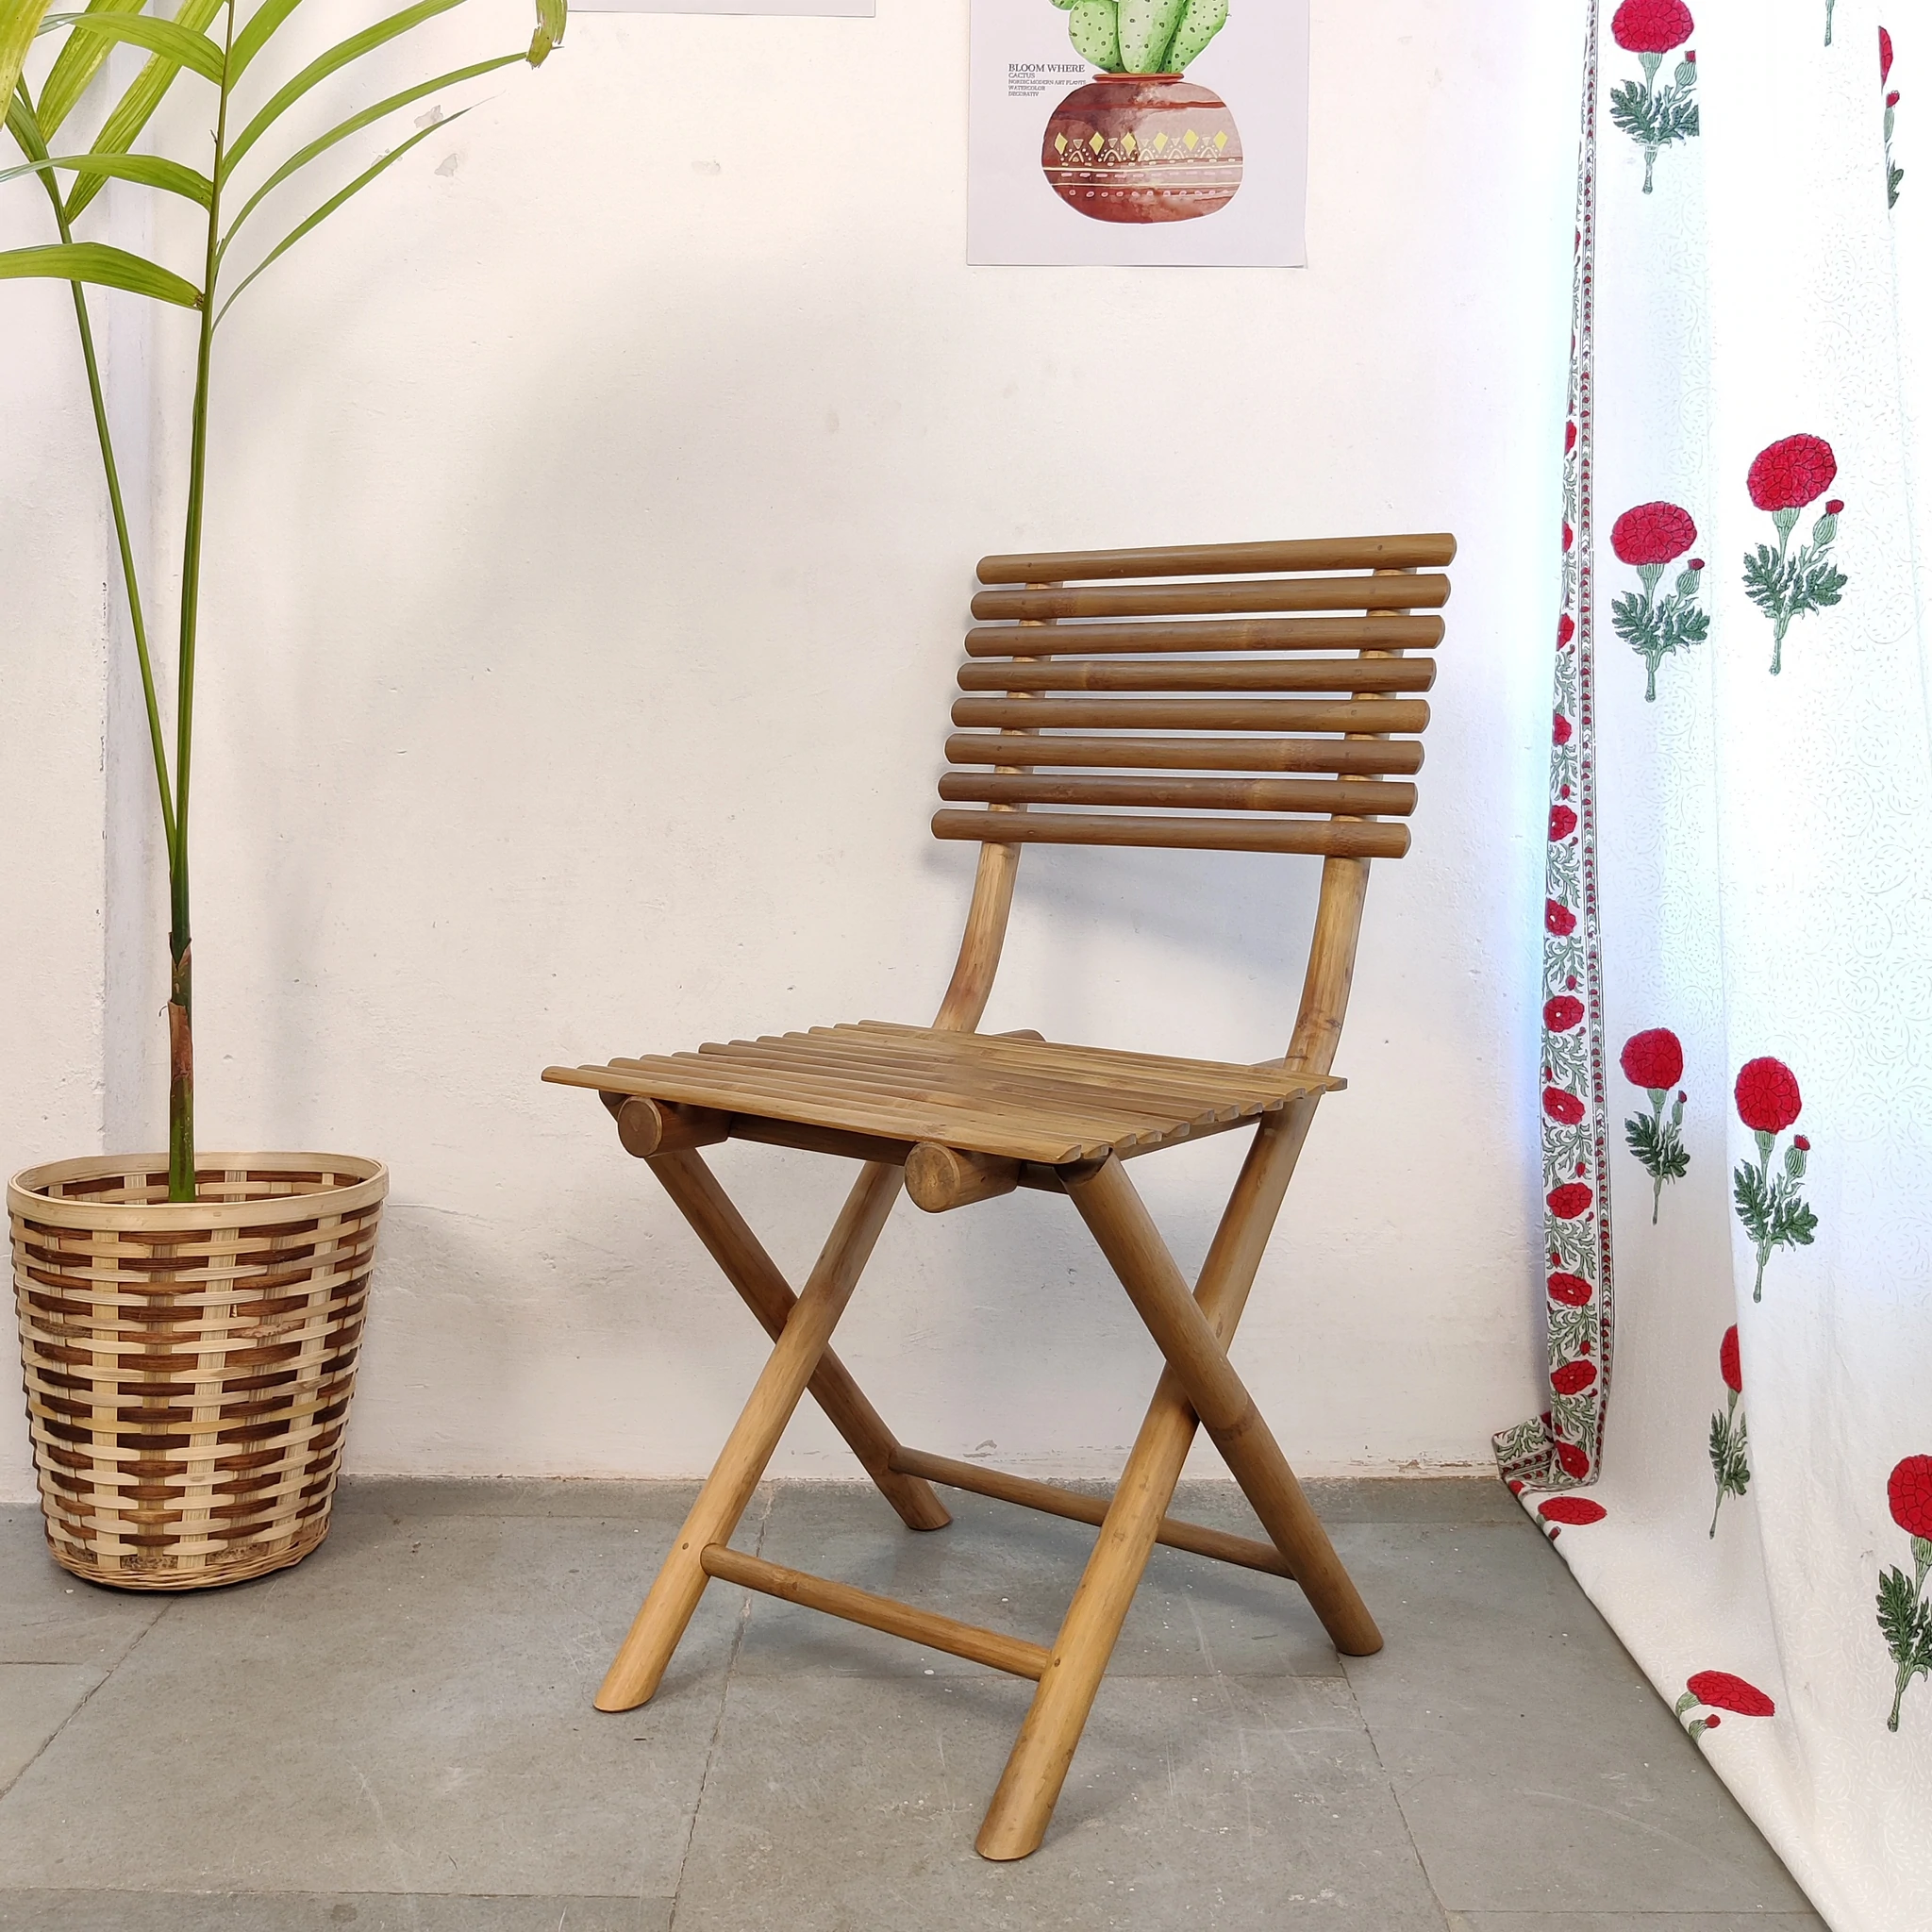 Woodygrass – Bamboo Furniture in India